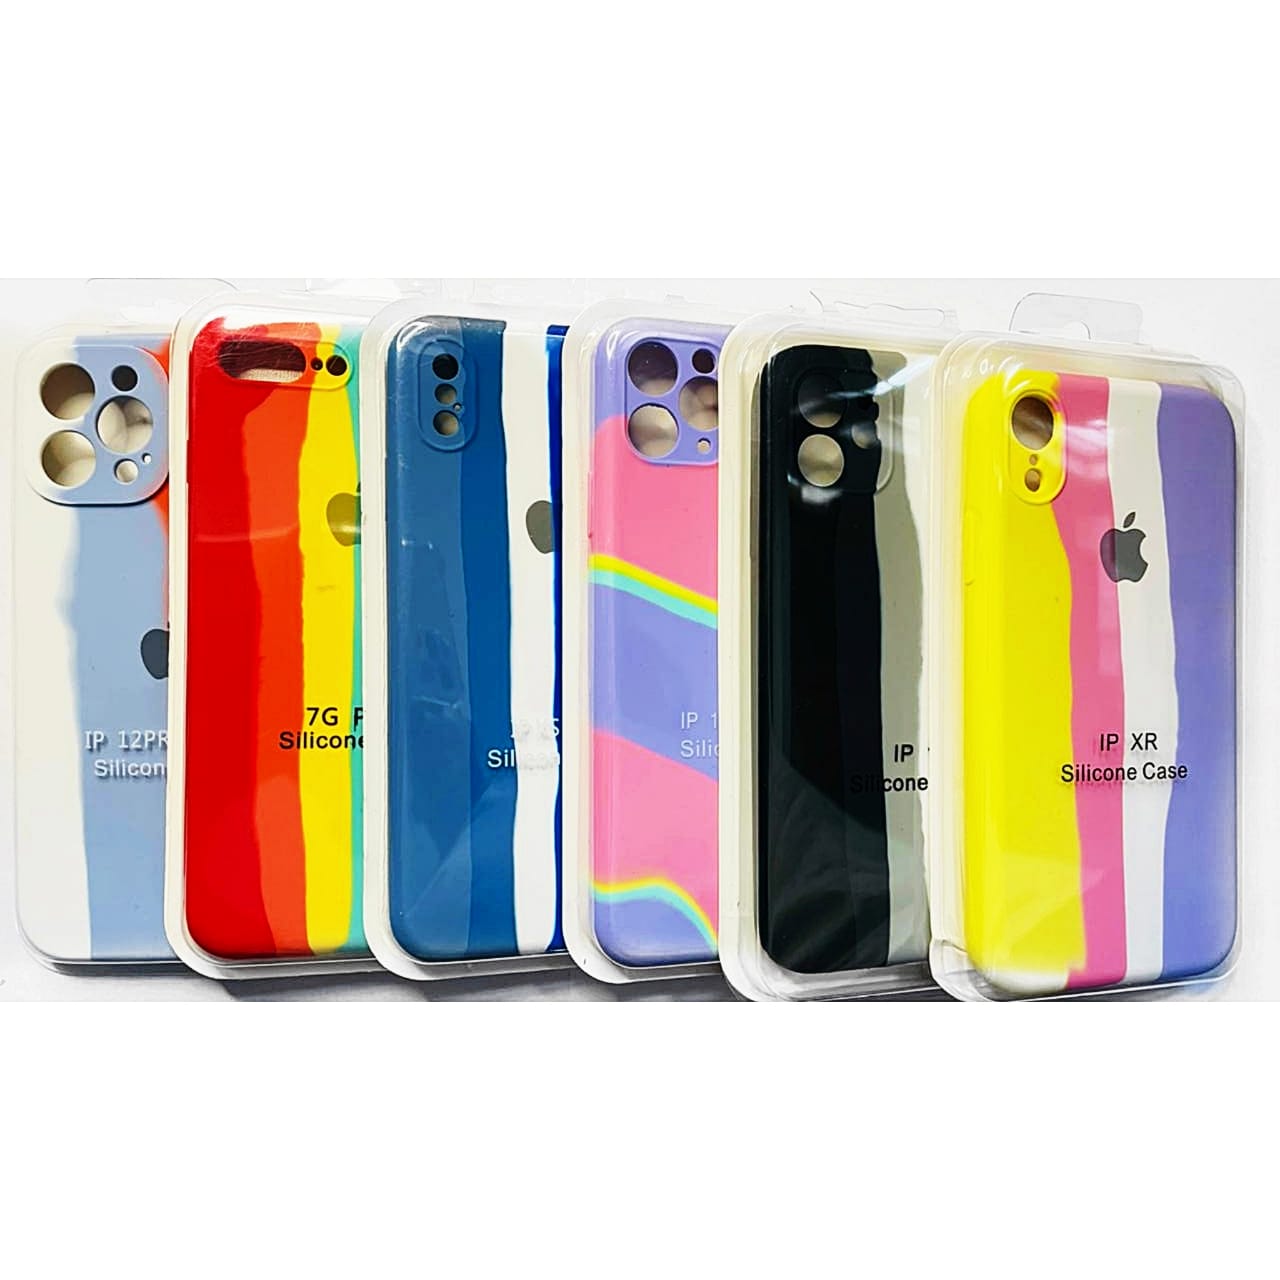 Capa Case Original Iphone 6 Plus Cores Pasteis  - Capinhas para Celular - Diversas cores - Central - unidade            Cod. CP IP 6 PLUS PASTEIS